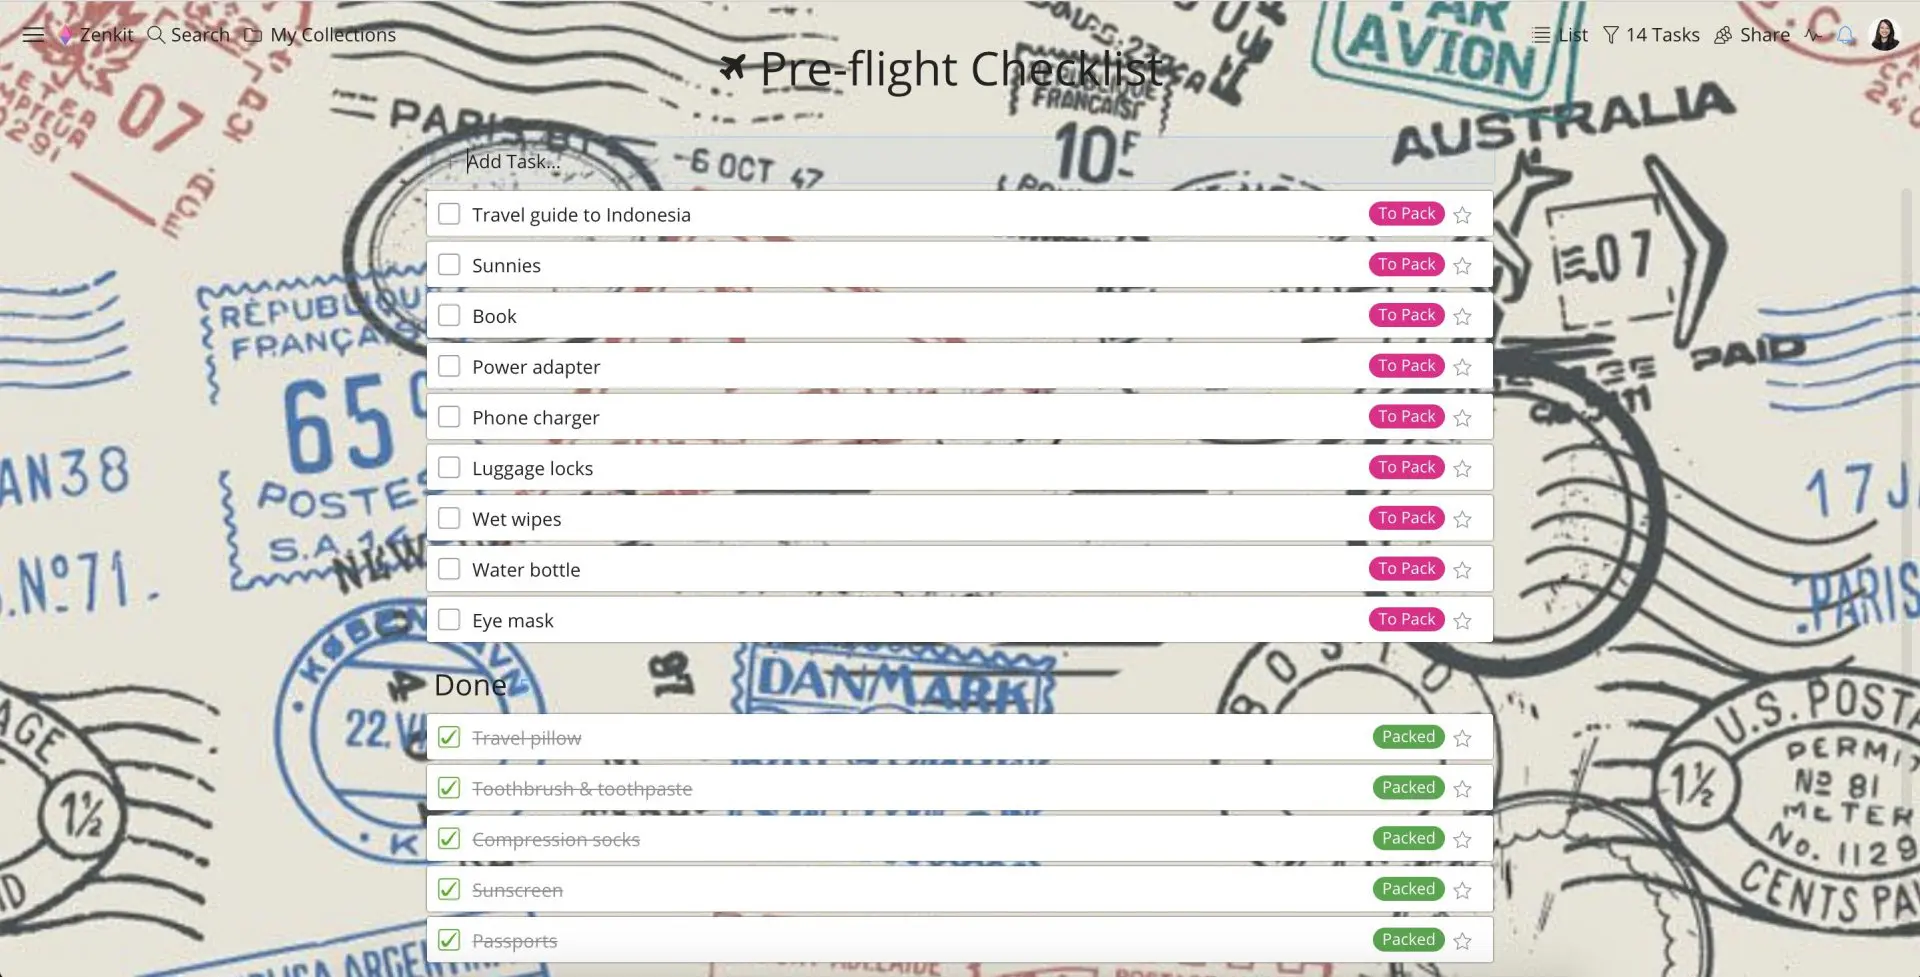 Pre-flight checklist using Zenkit's online task list